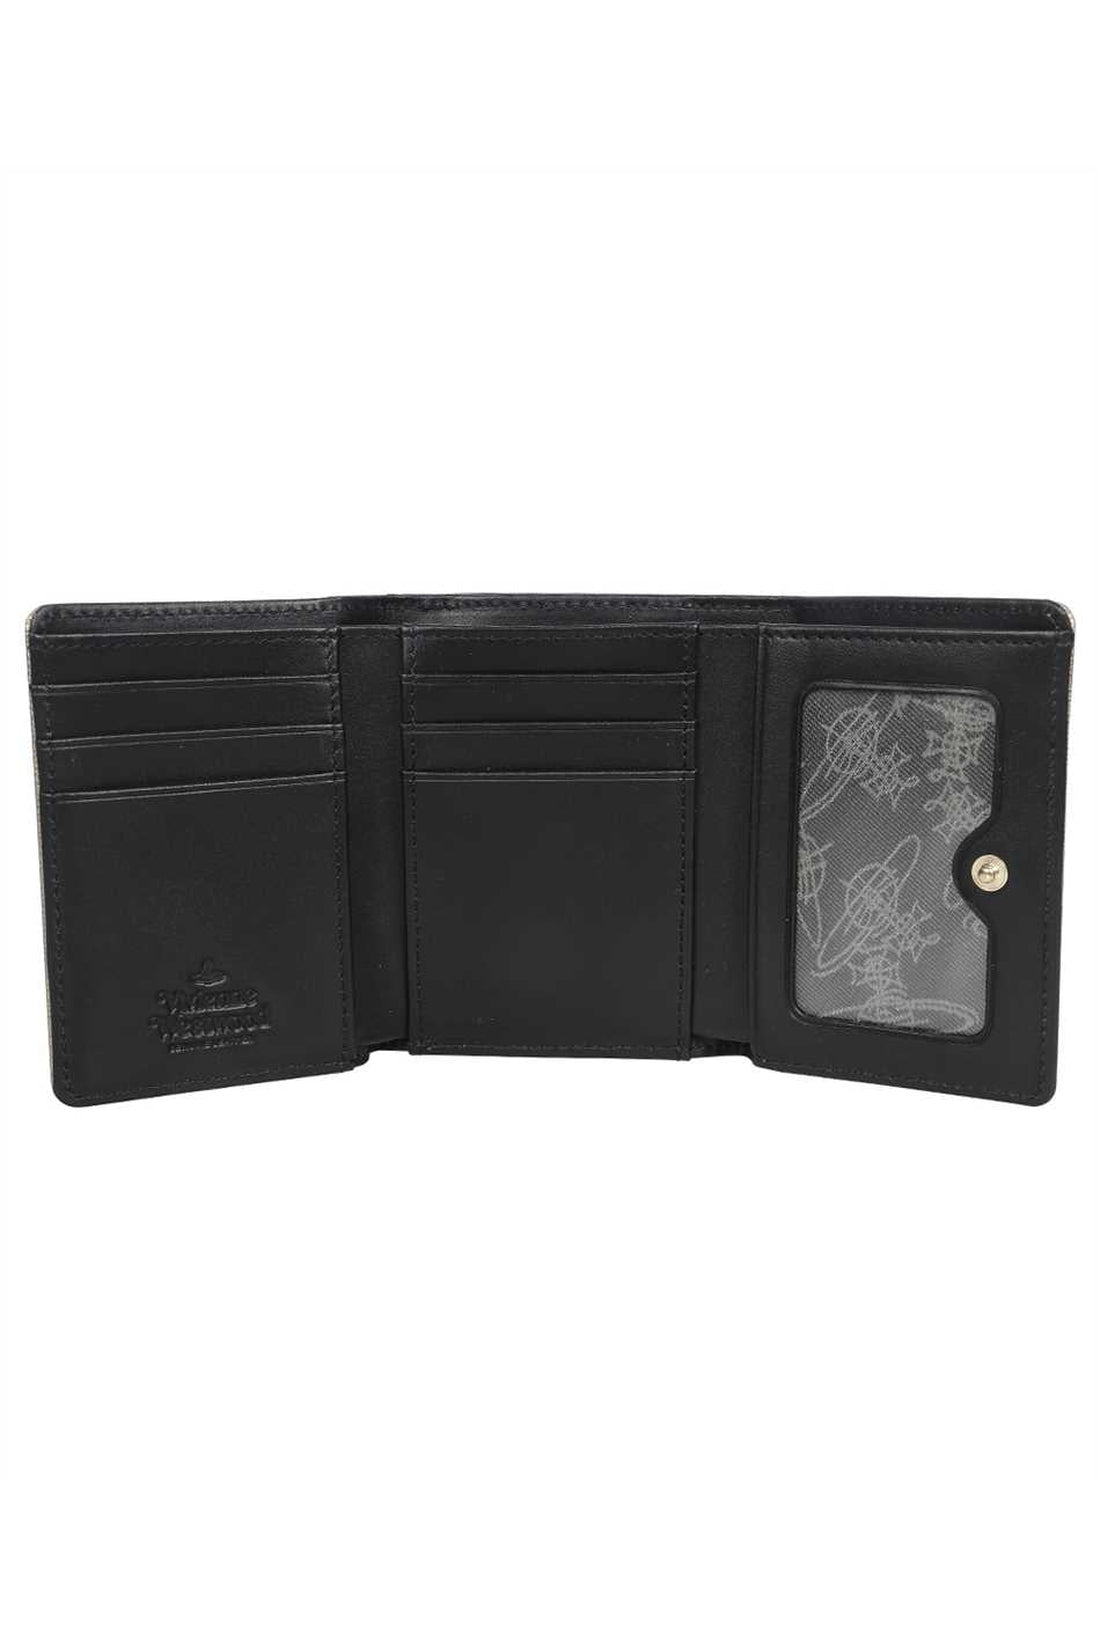 Vivienne Westwood-OUTLET-SALE-Small leather flap-over wallet-ARCHIVIST